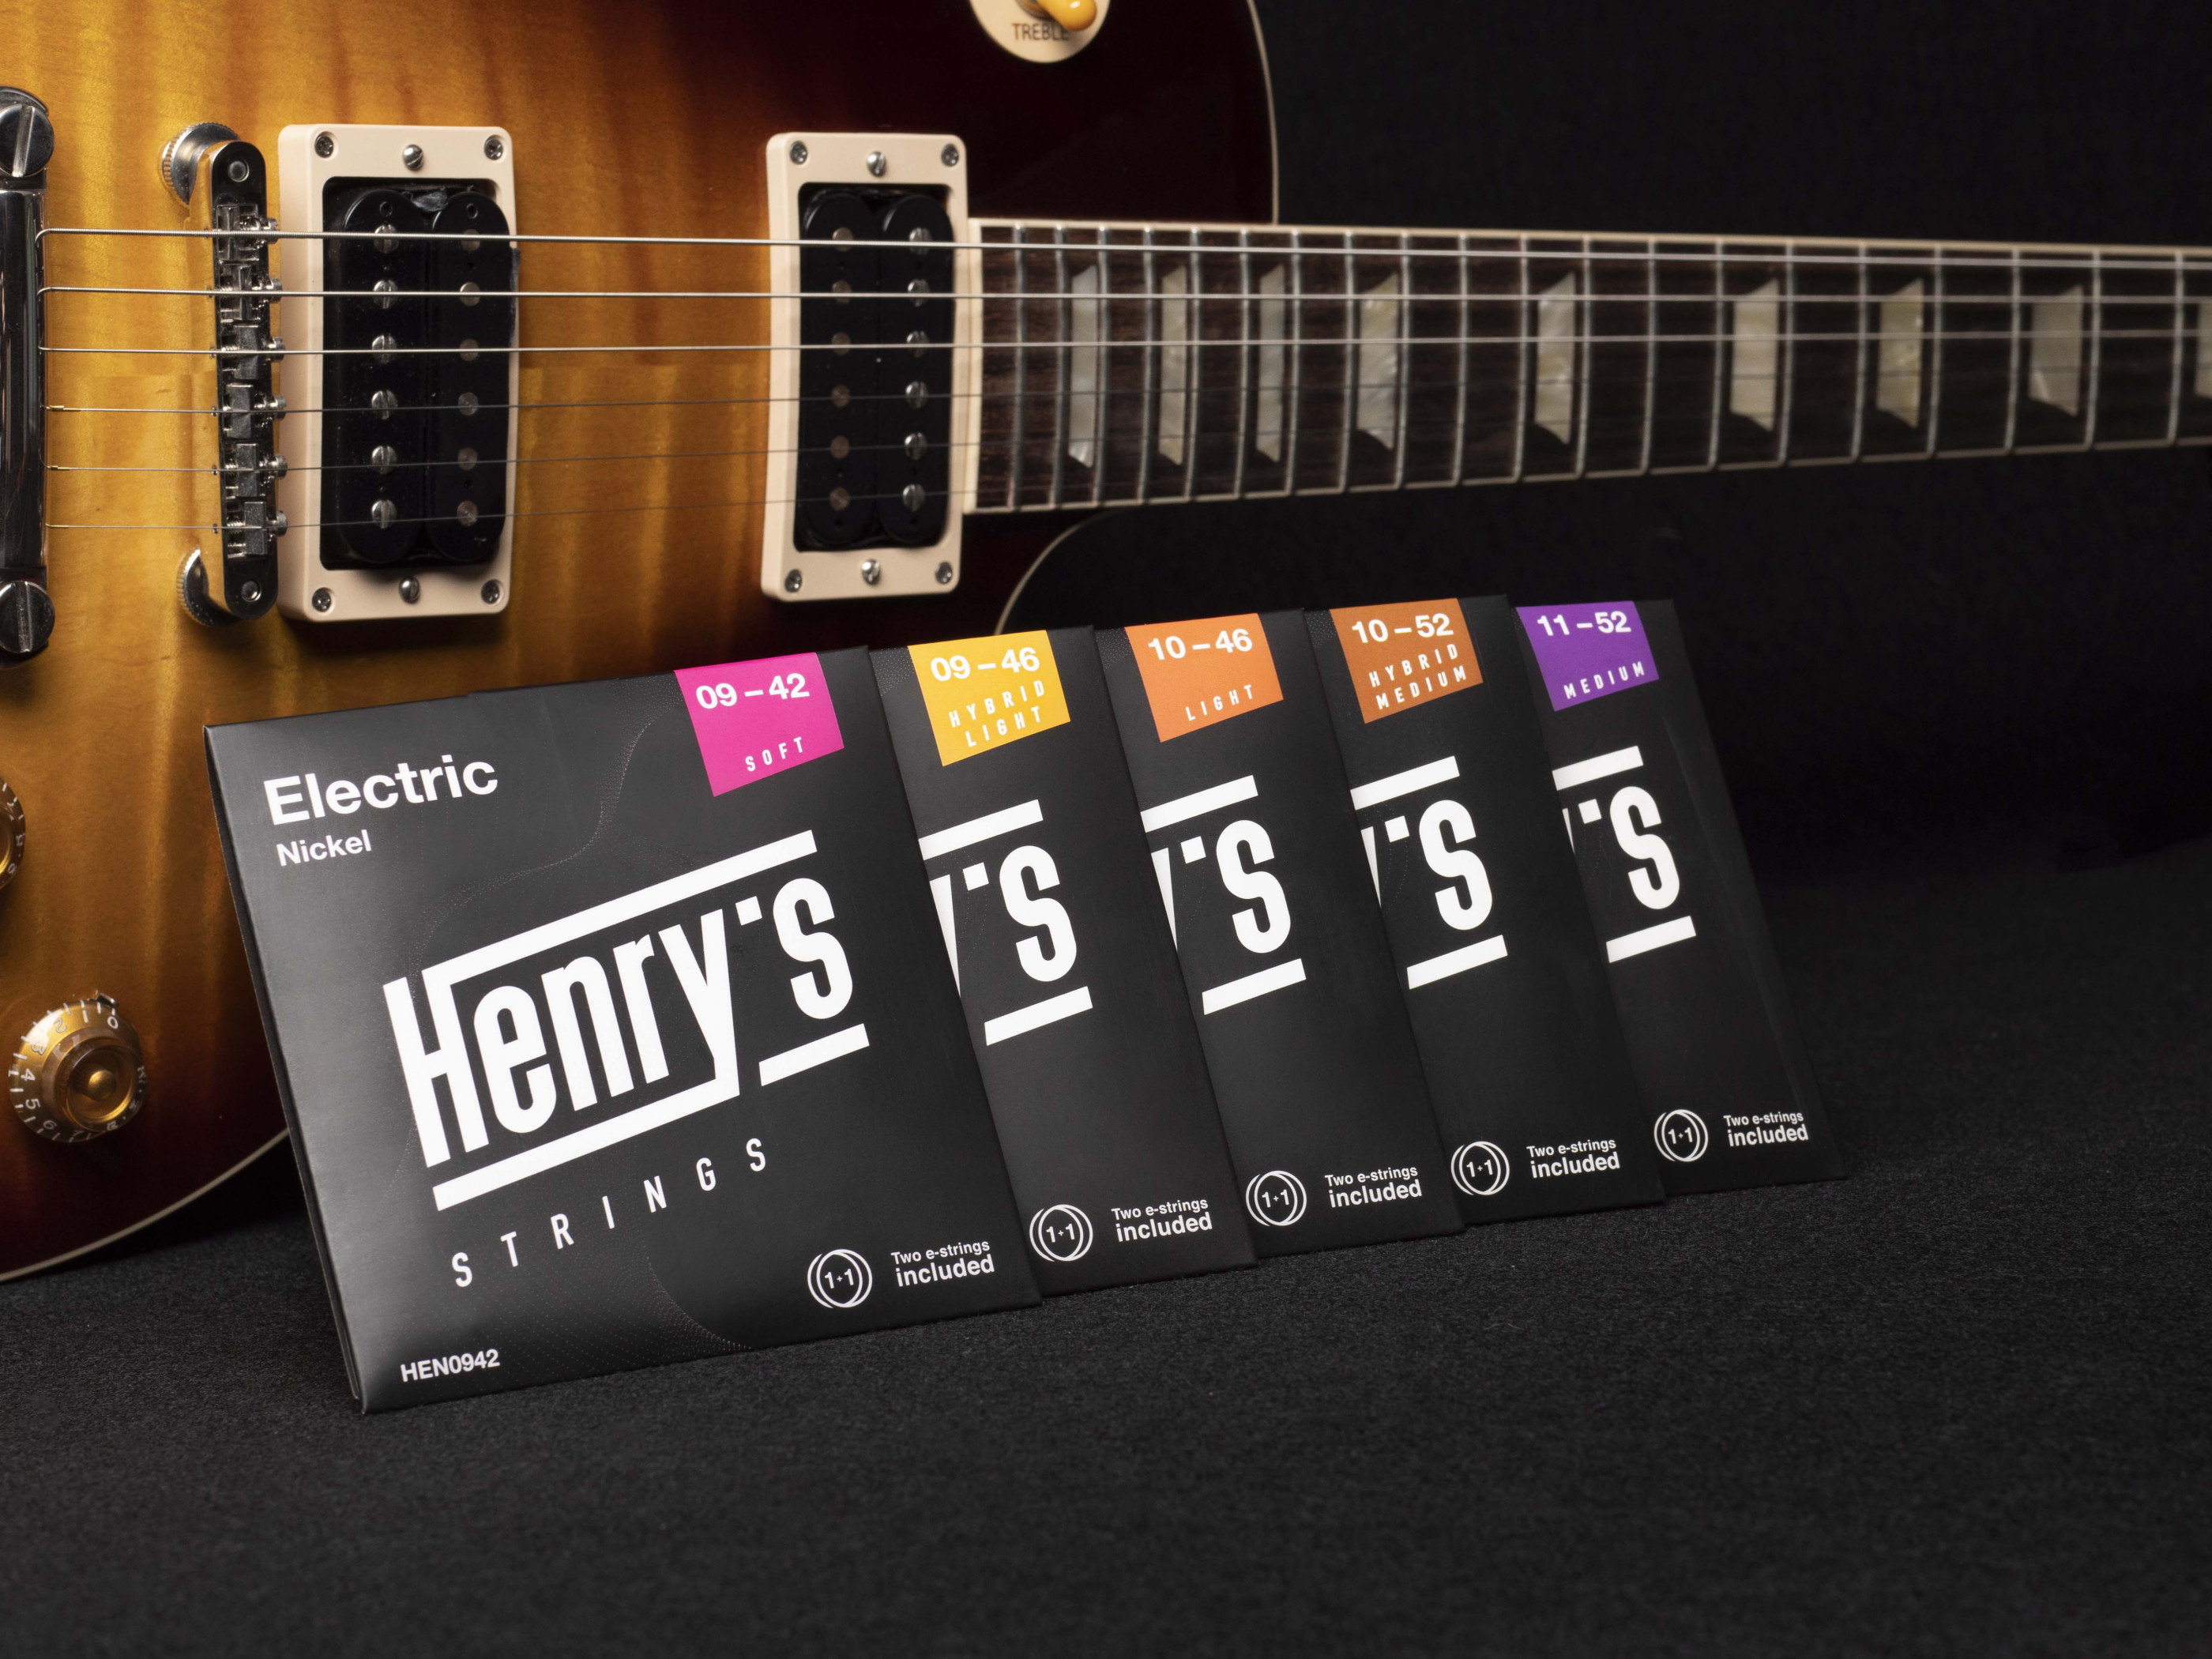 HENRY'S STRINGS HEN1152 Electric Nickel - 011“ - 052“